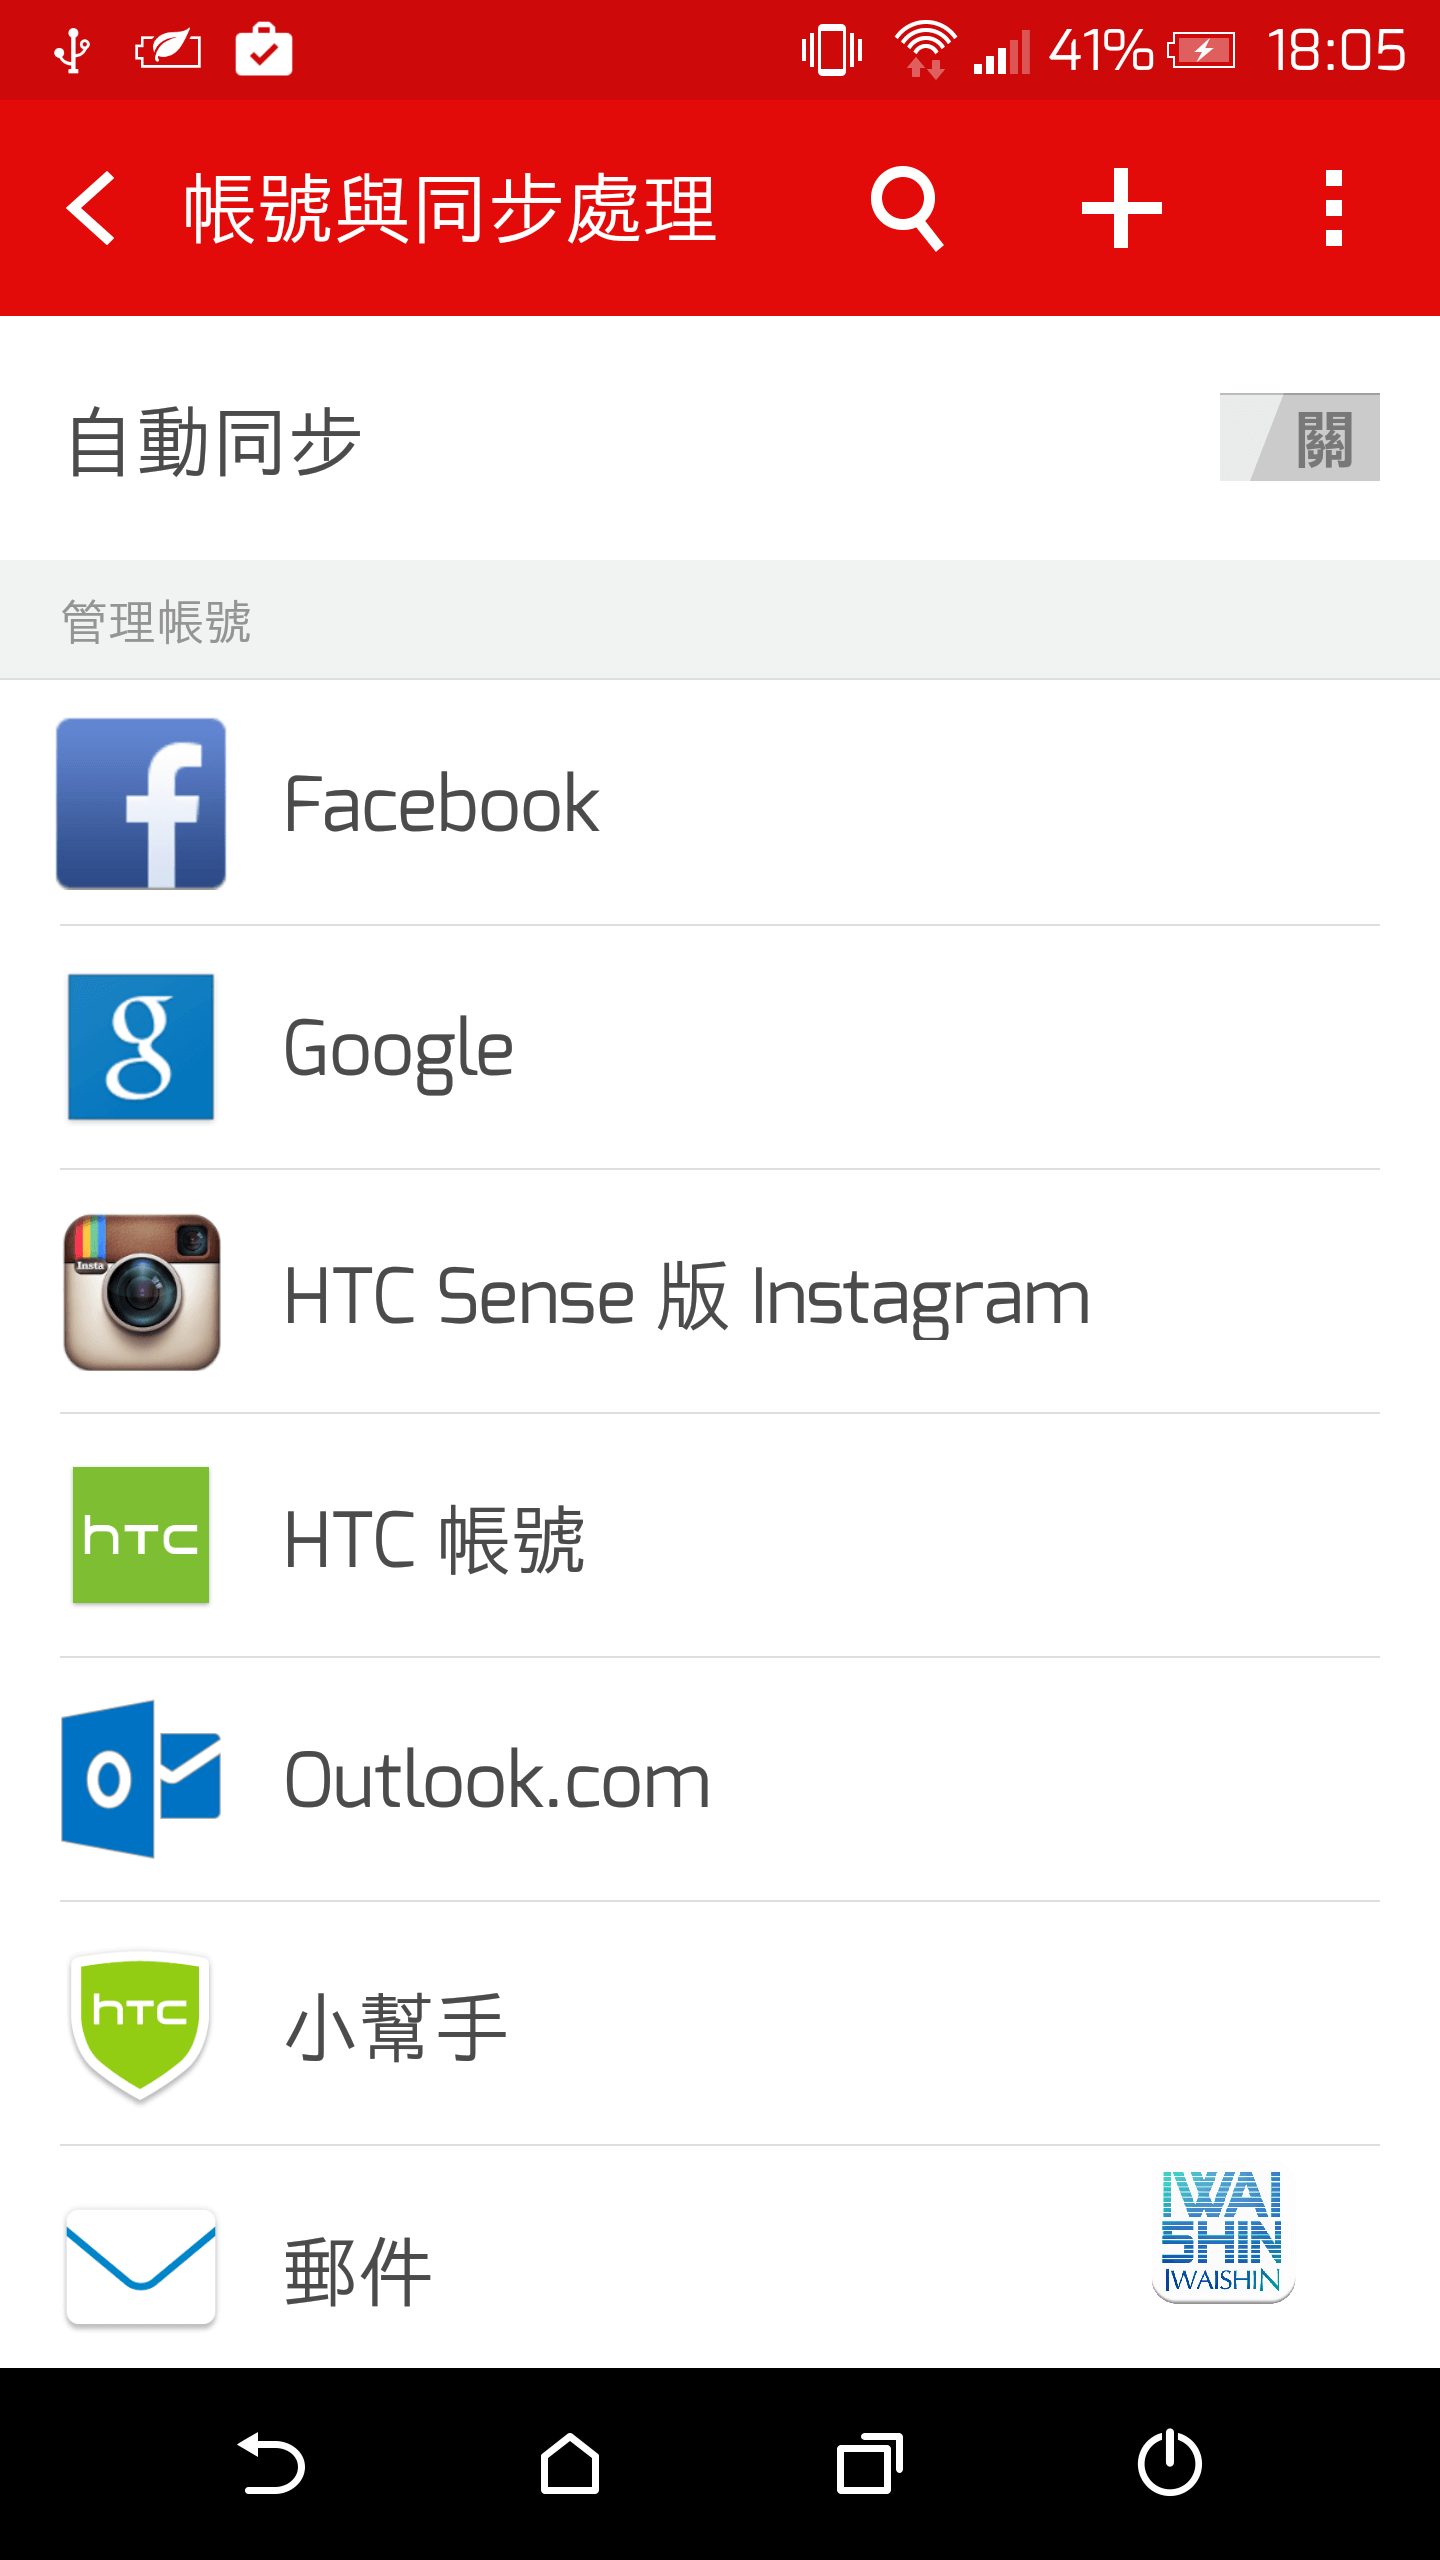 HTC One M9+ 耗電-14-18-05-13